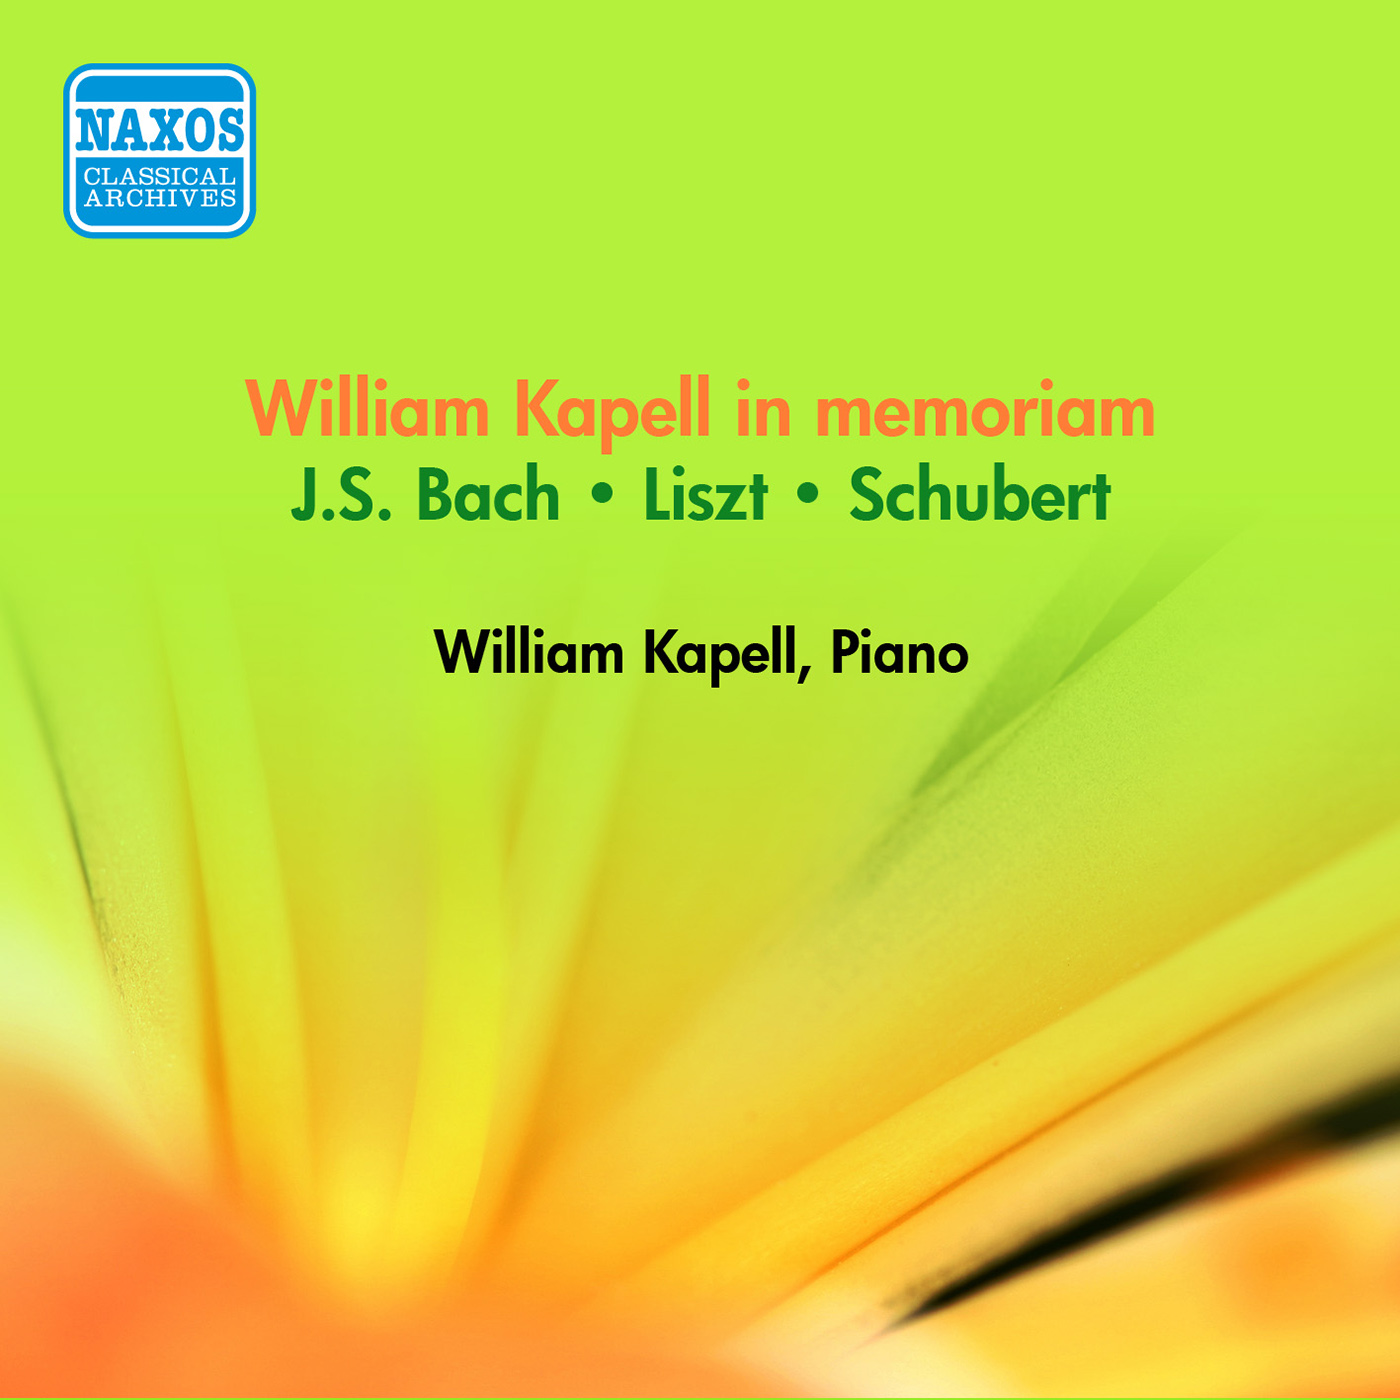 Piano Recital: Kapell, William - BACH, J.S. / SCHUBERT, F. / LISZT, F. (William Kapell in memoriam) (1945-53)